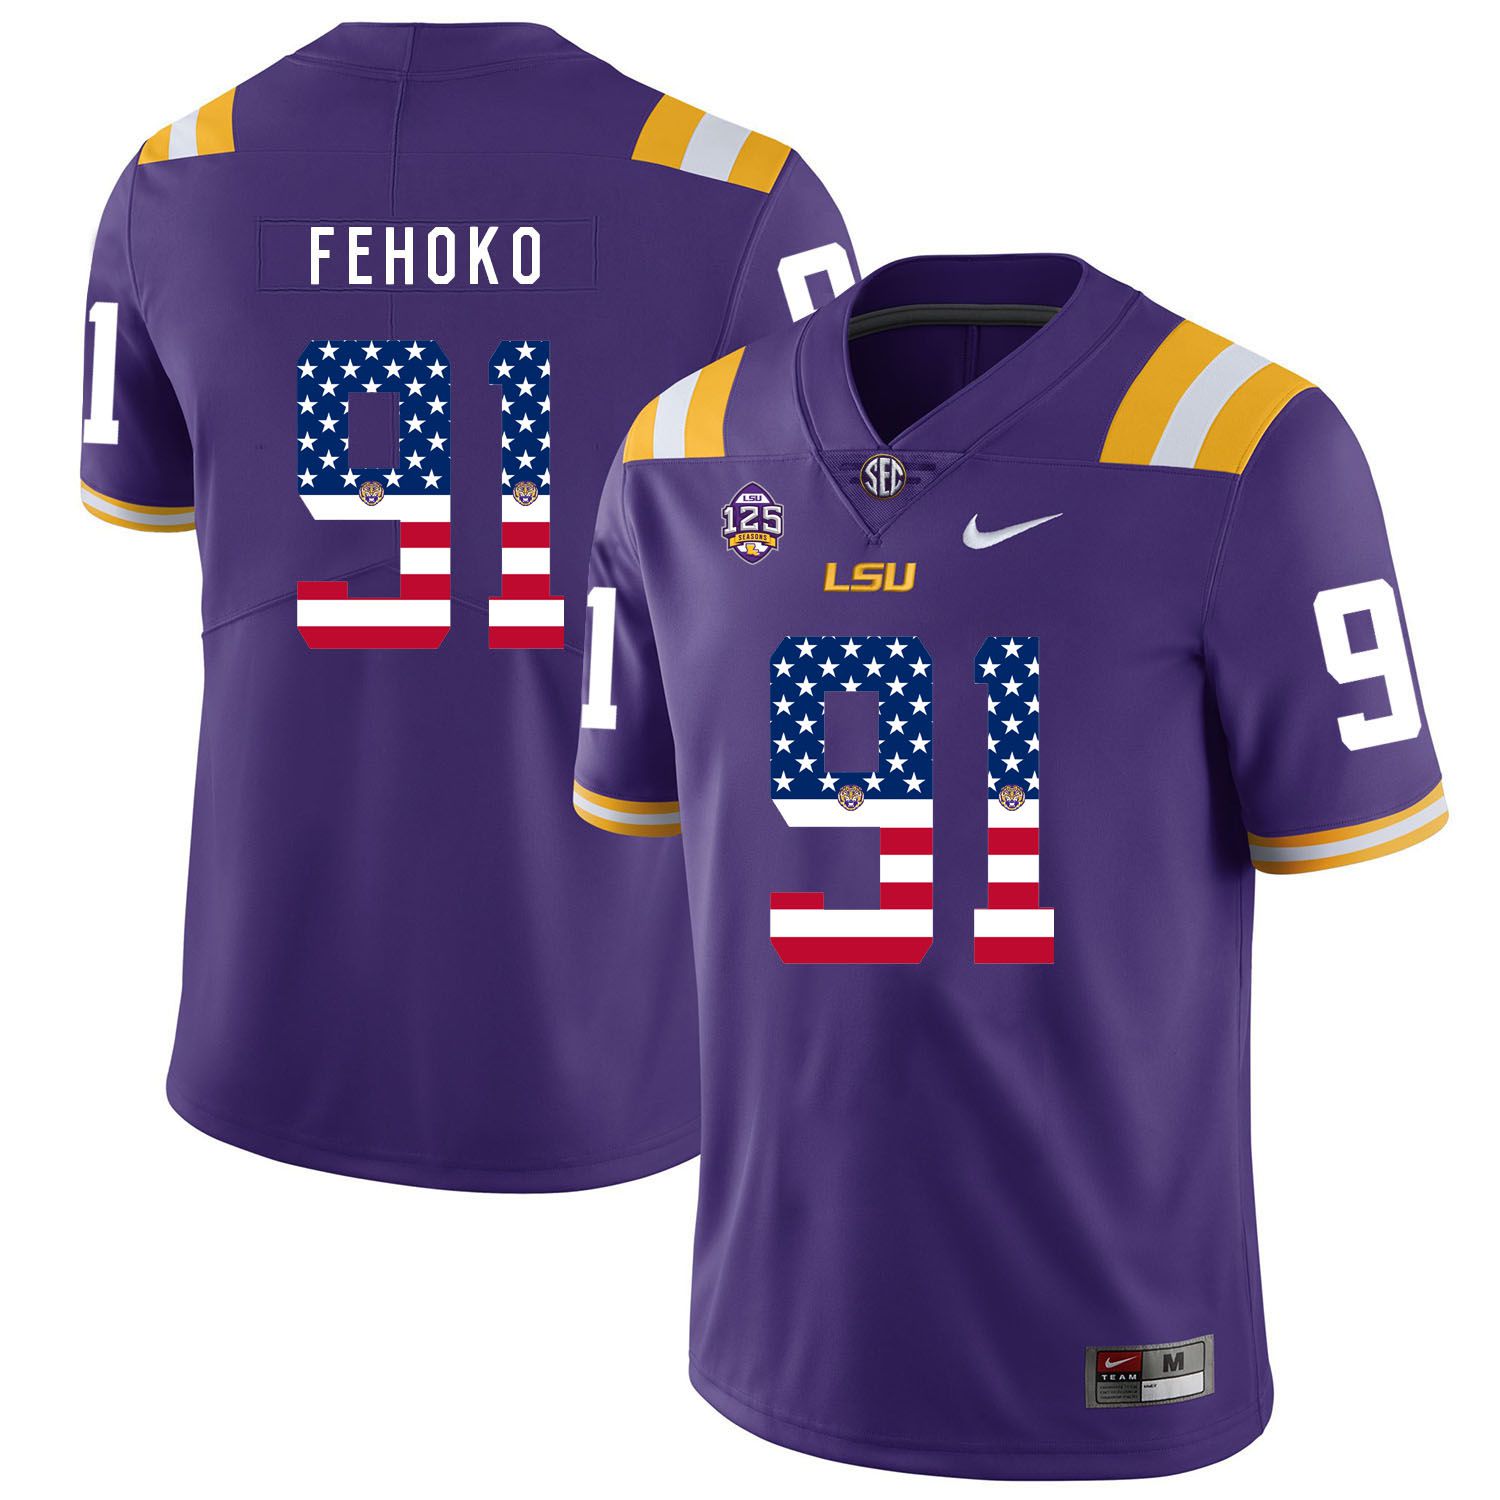 Men LSU Tigers #91 Fehoko Purple Flag Customized NCAA Jerseys